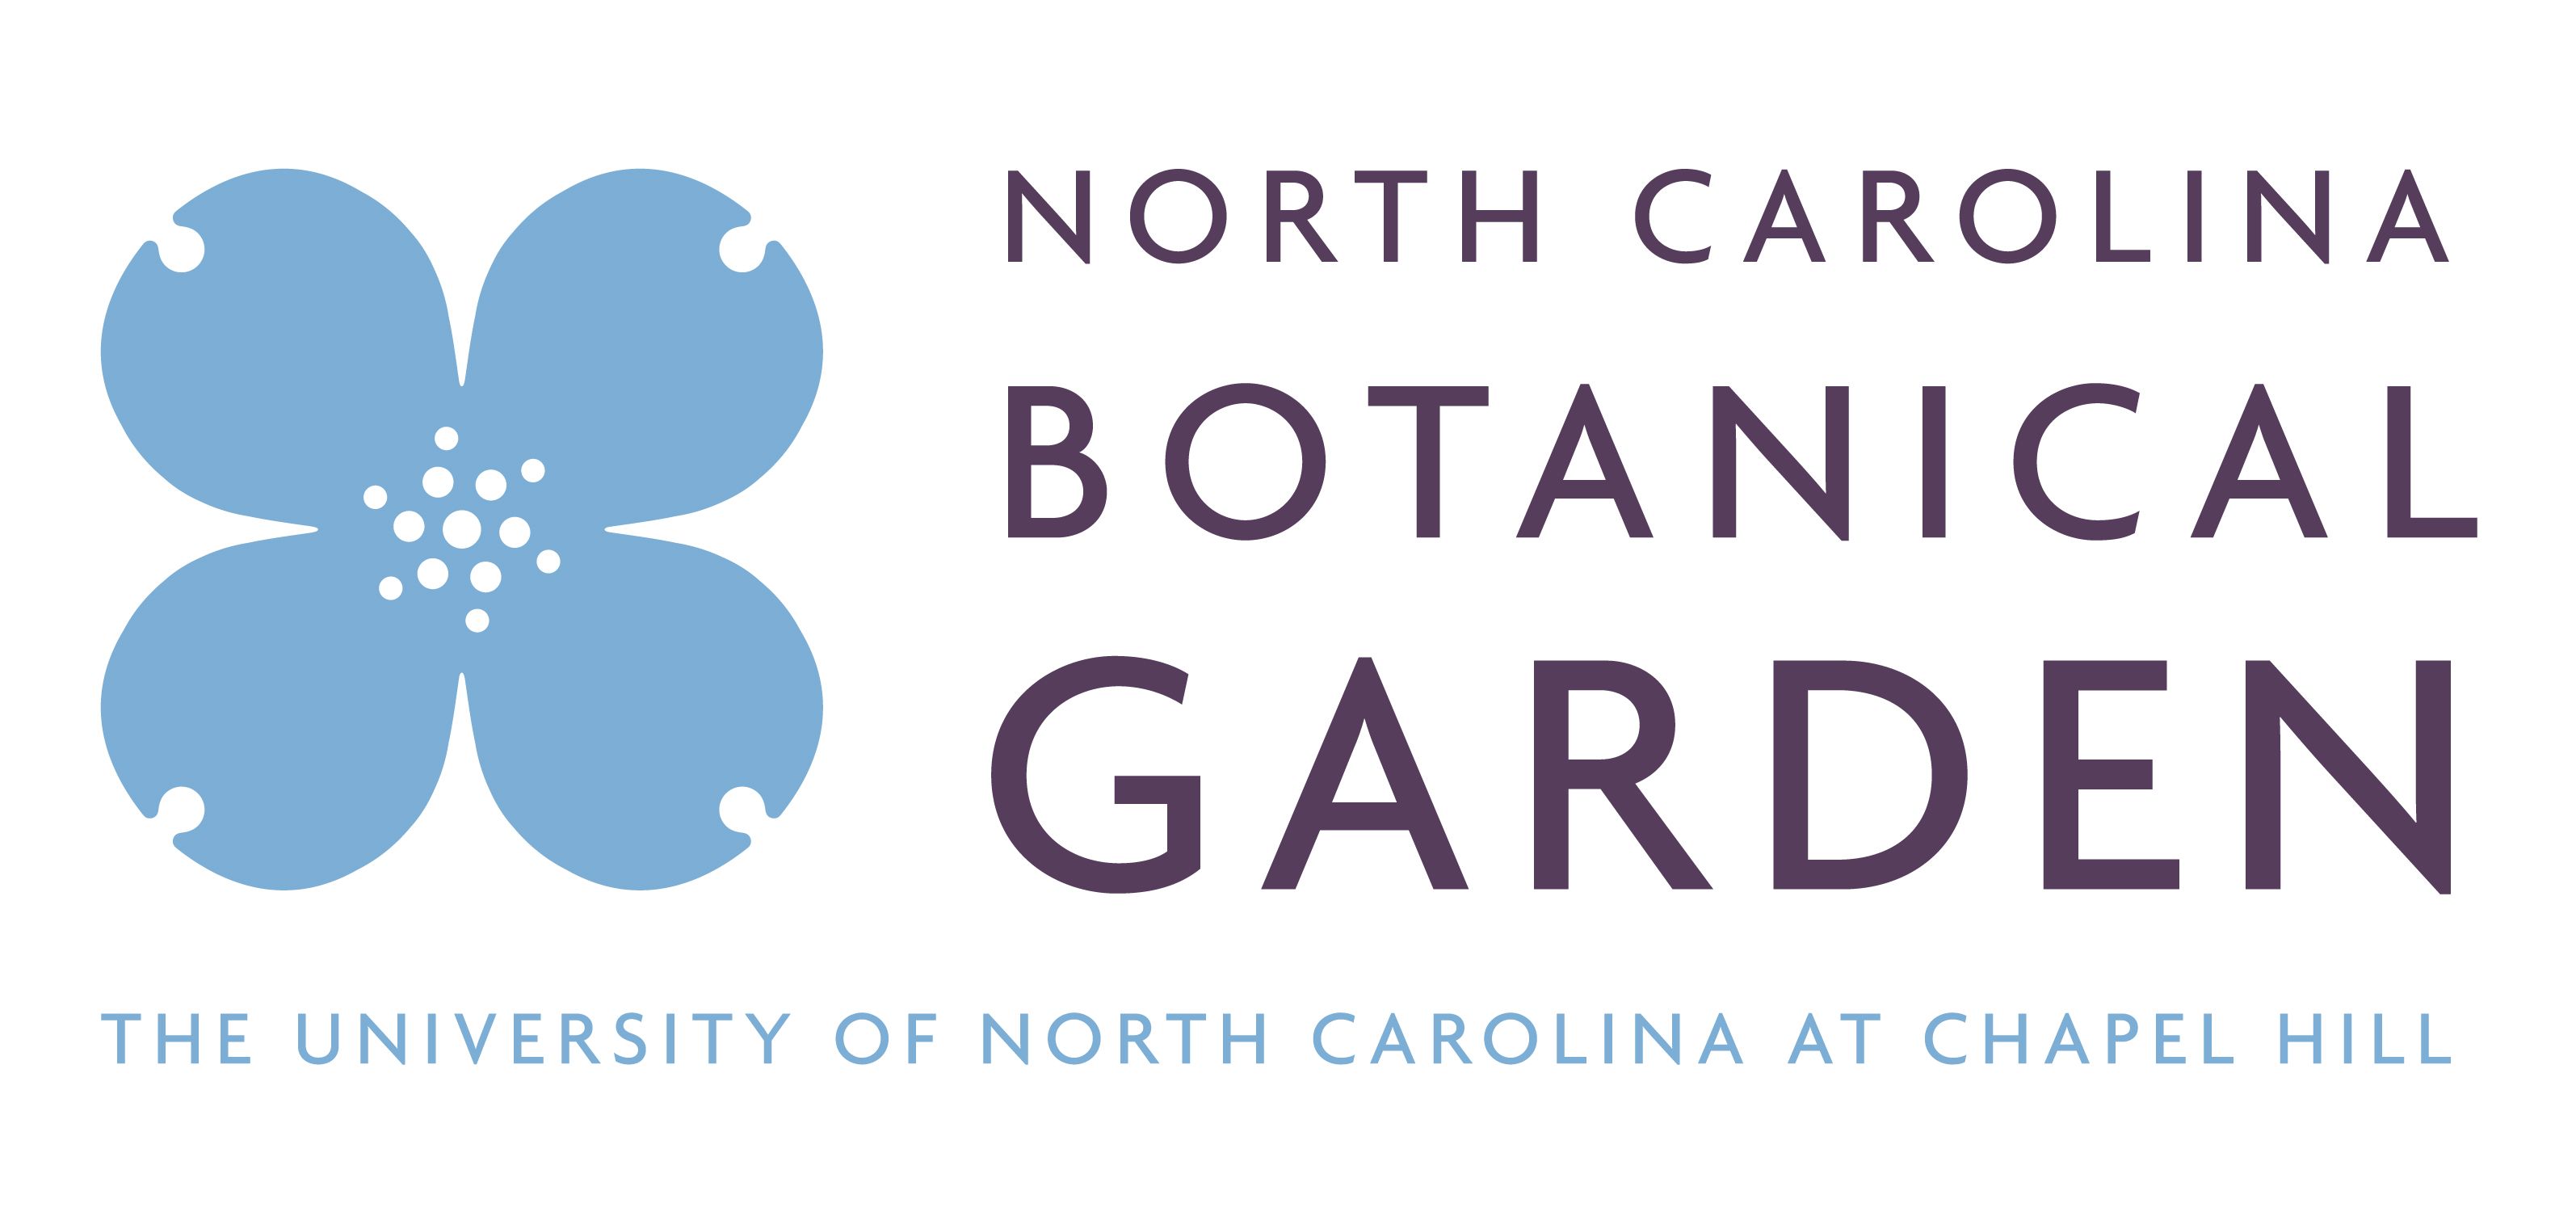 North Carolina Botanical Garden seeks a Research Botanist